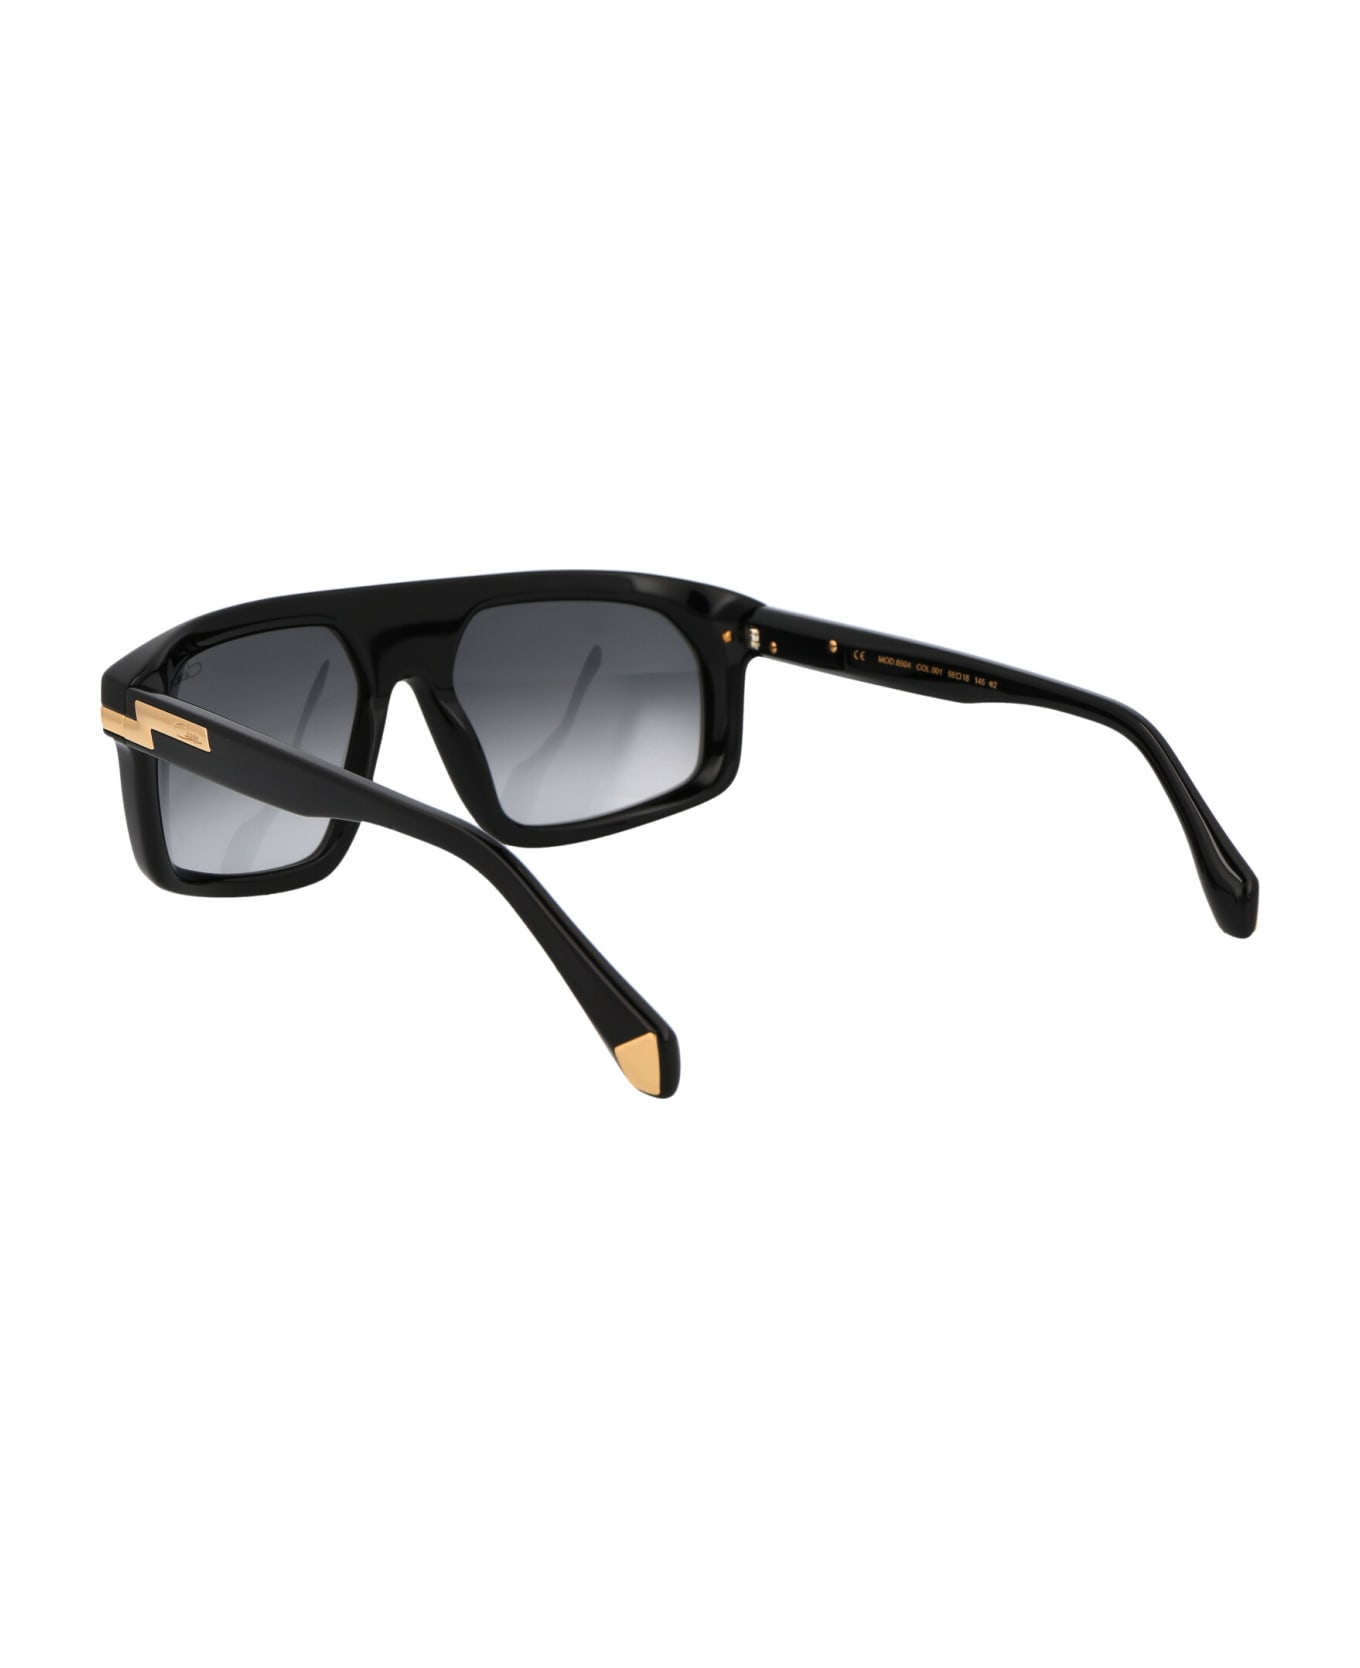 Cazal Mod. 8504 Sunglasses - 001 BLACK